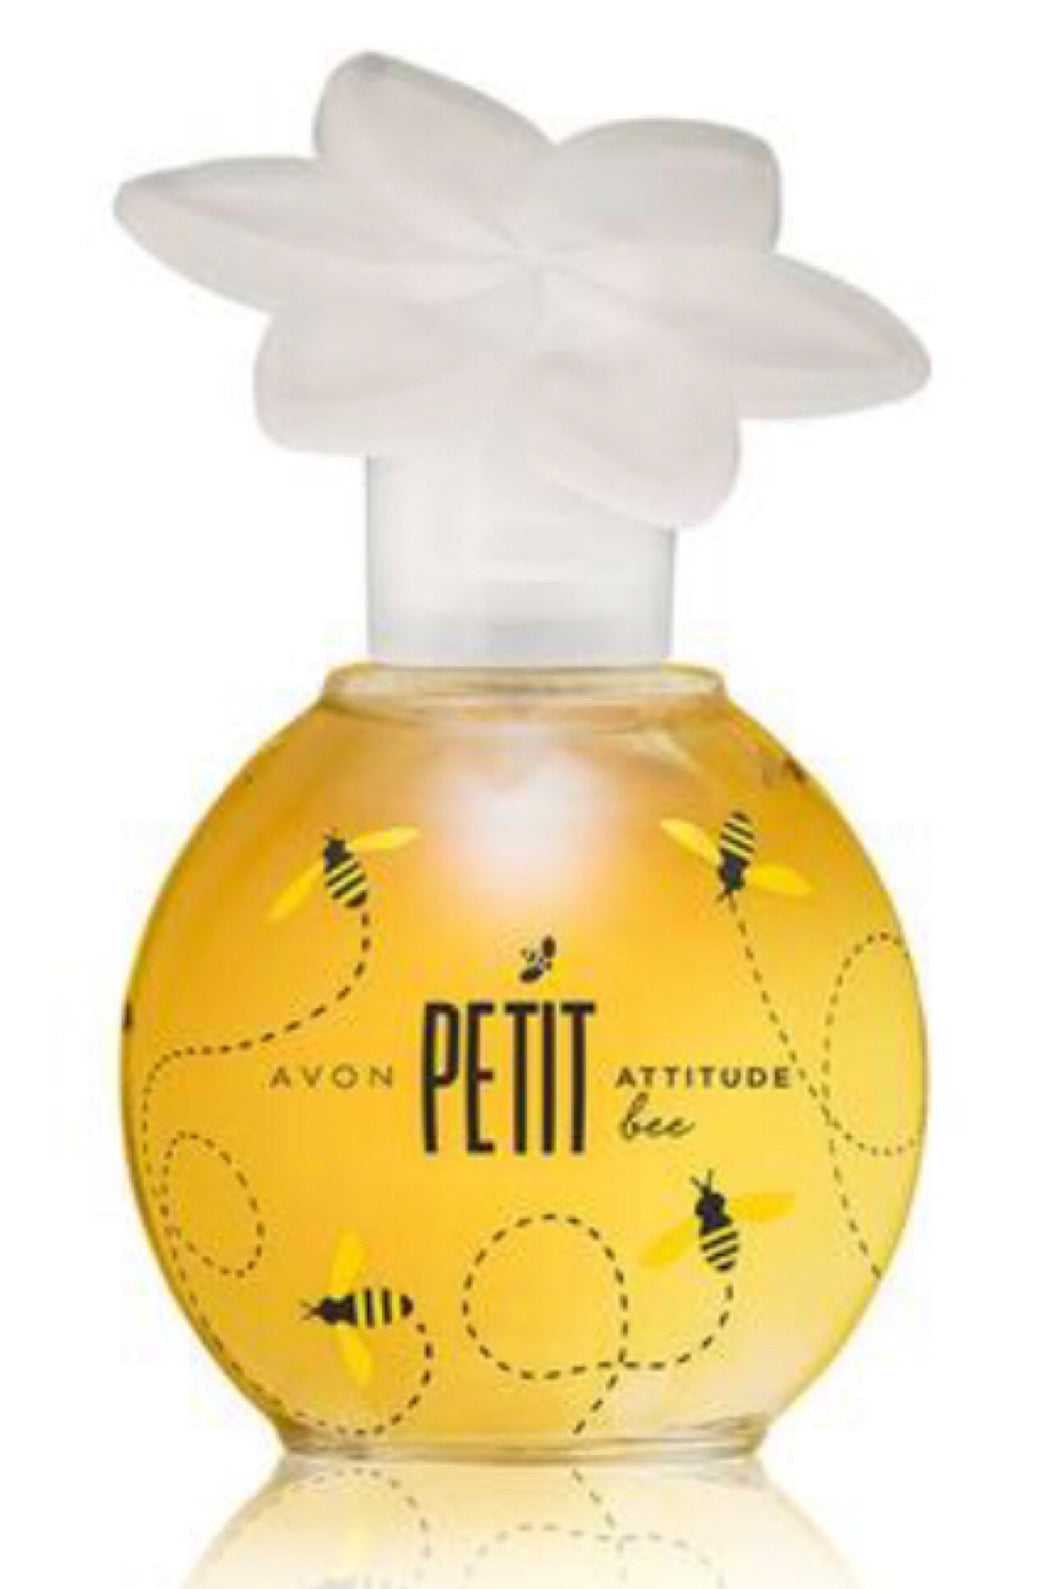 Avon Petit Attitude Bee EDT 50ml